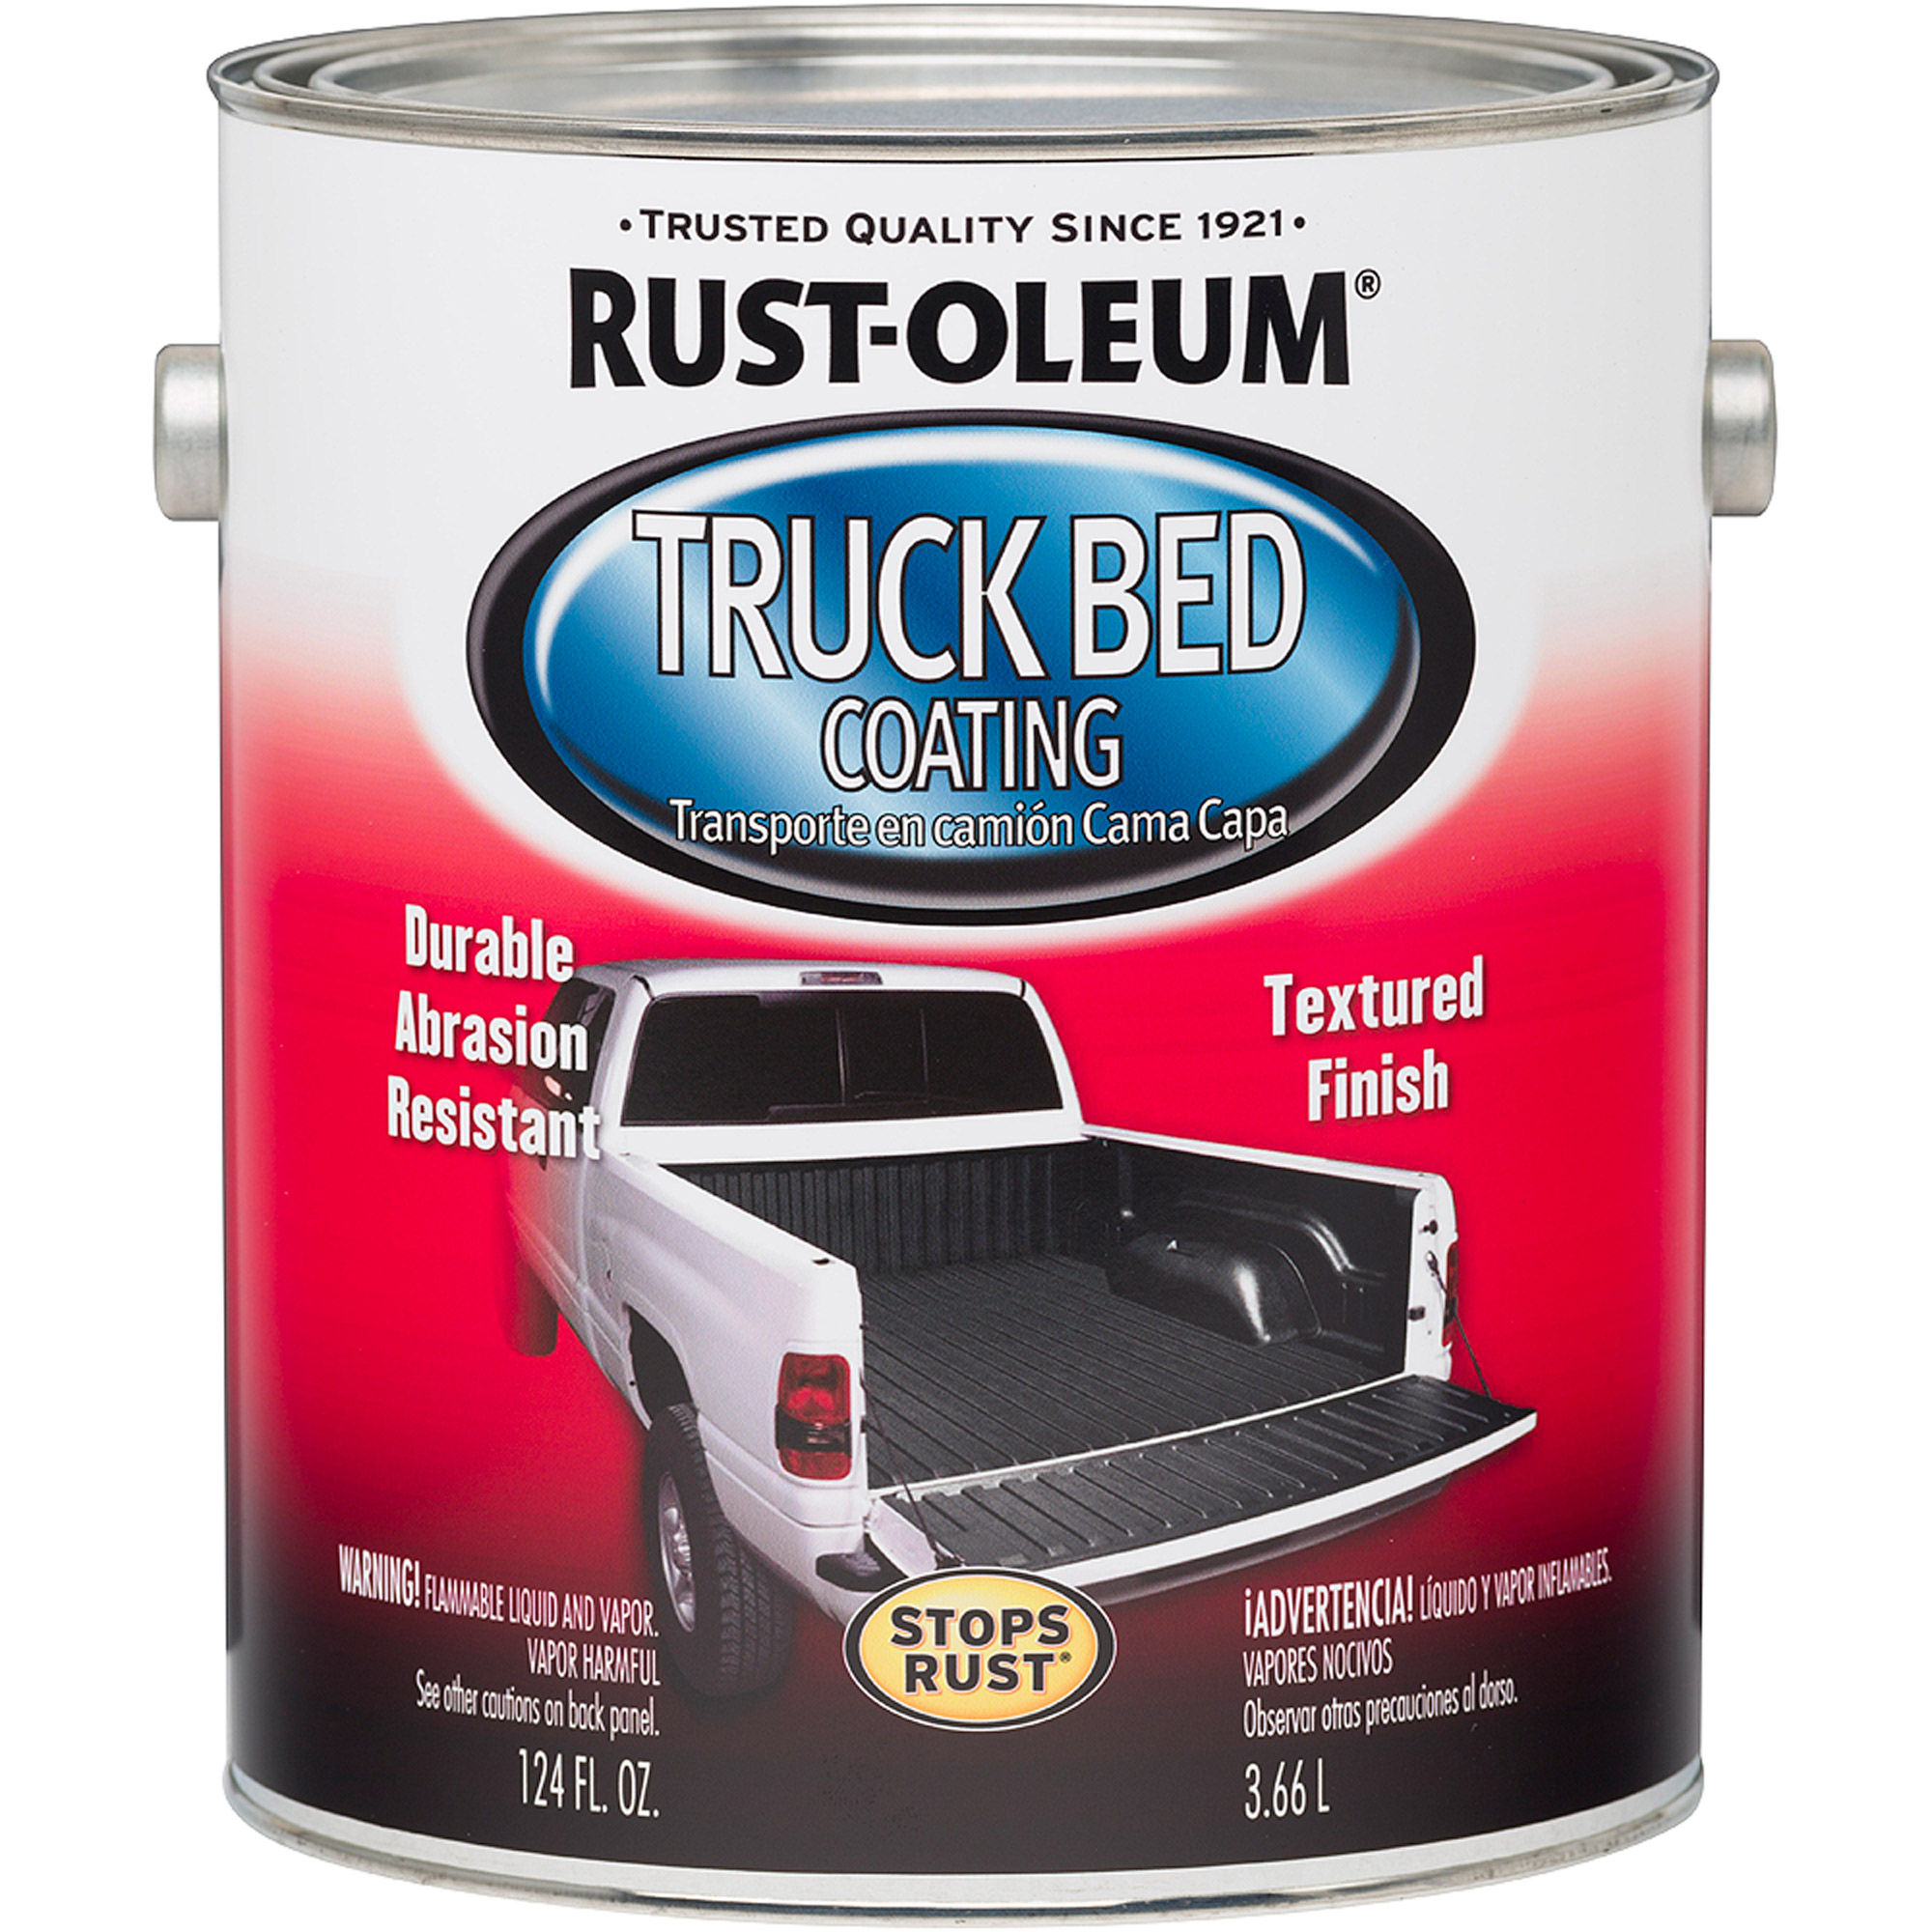 Rust-Oleum Truck Bed Coating, 124 oz - image 1 of 5